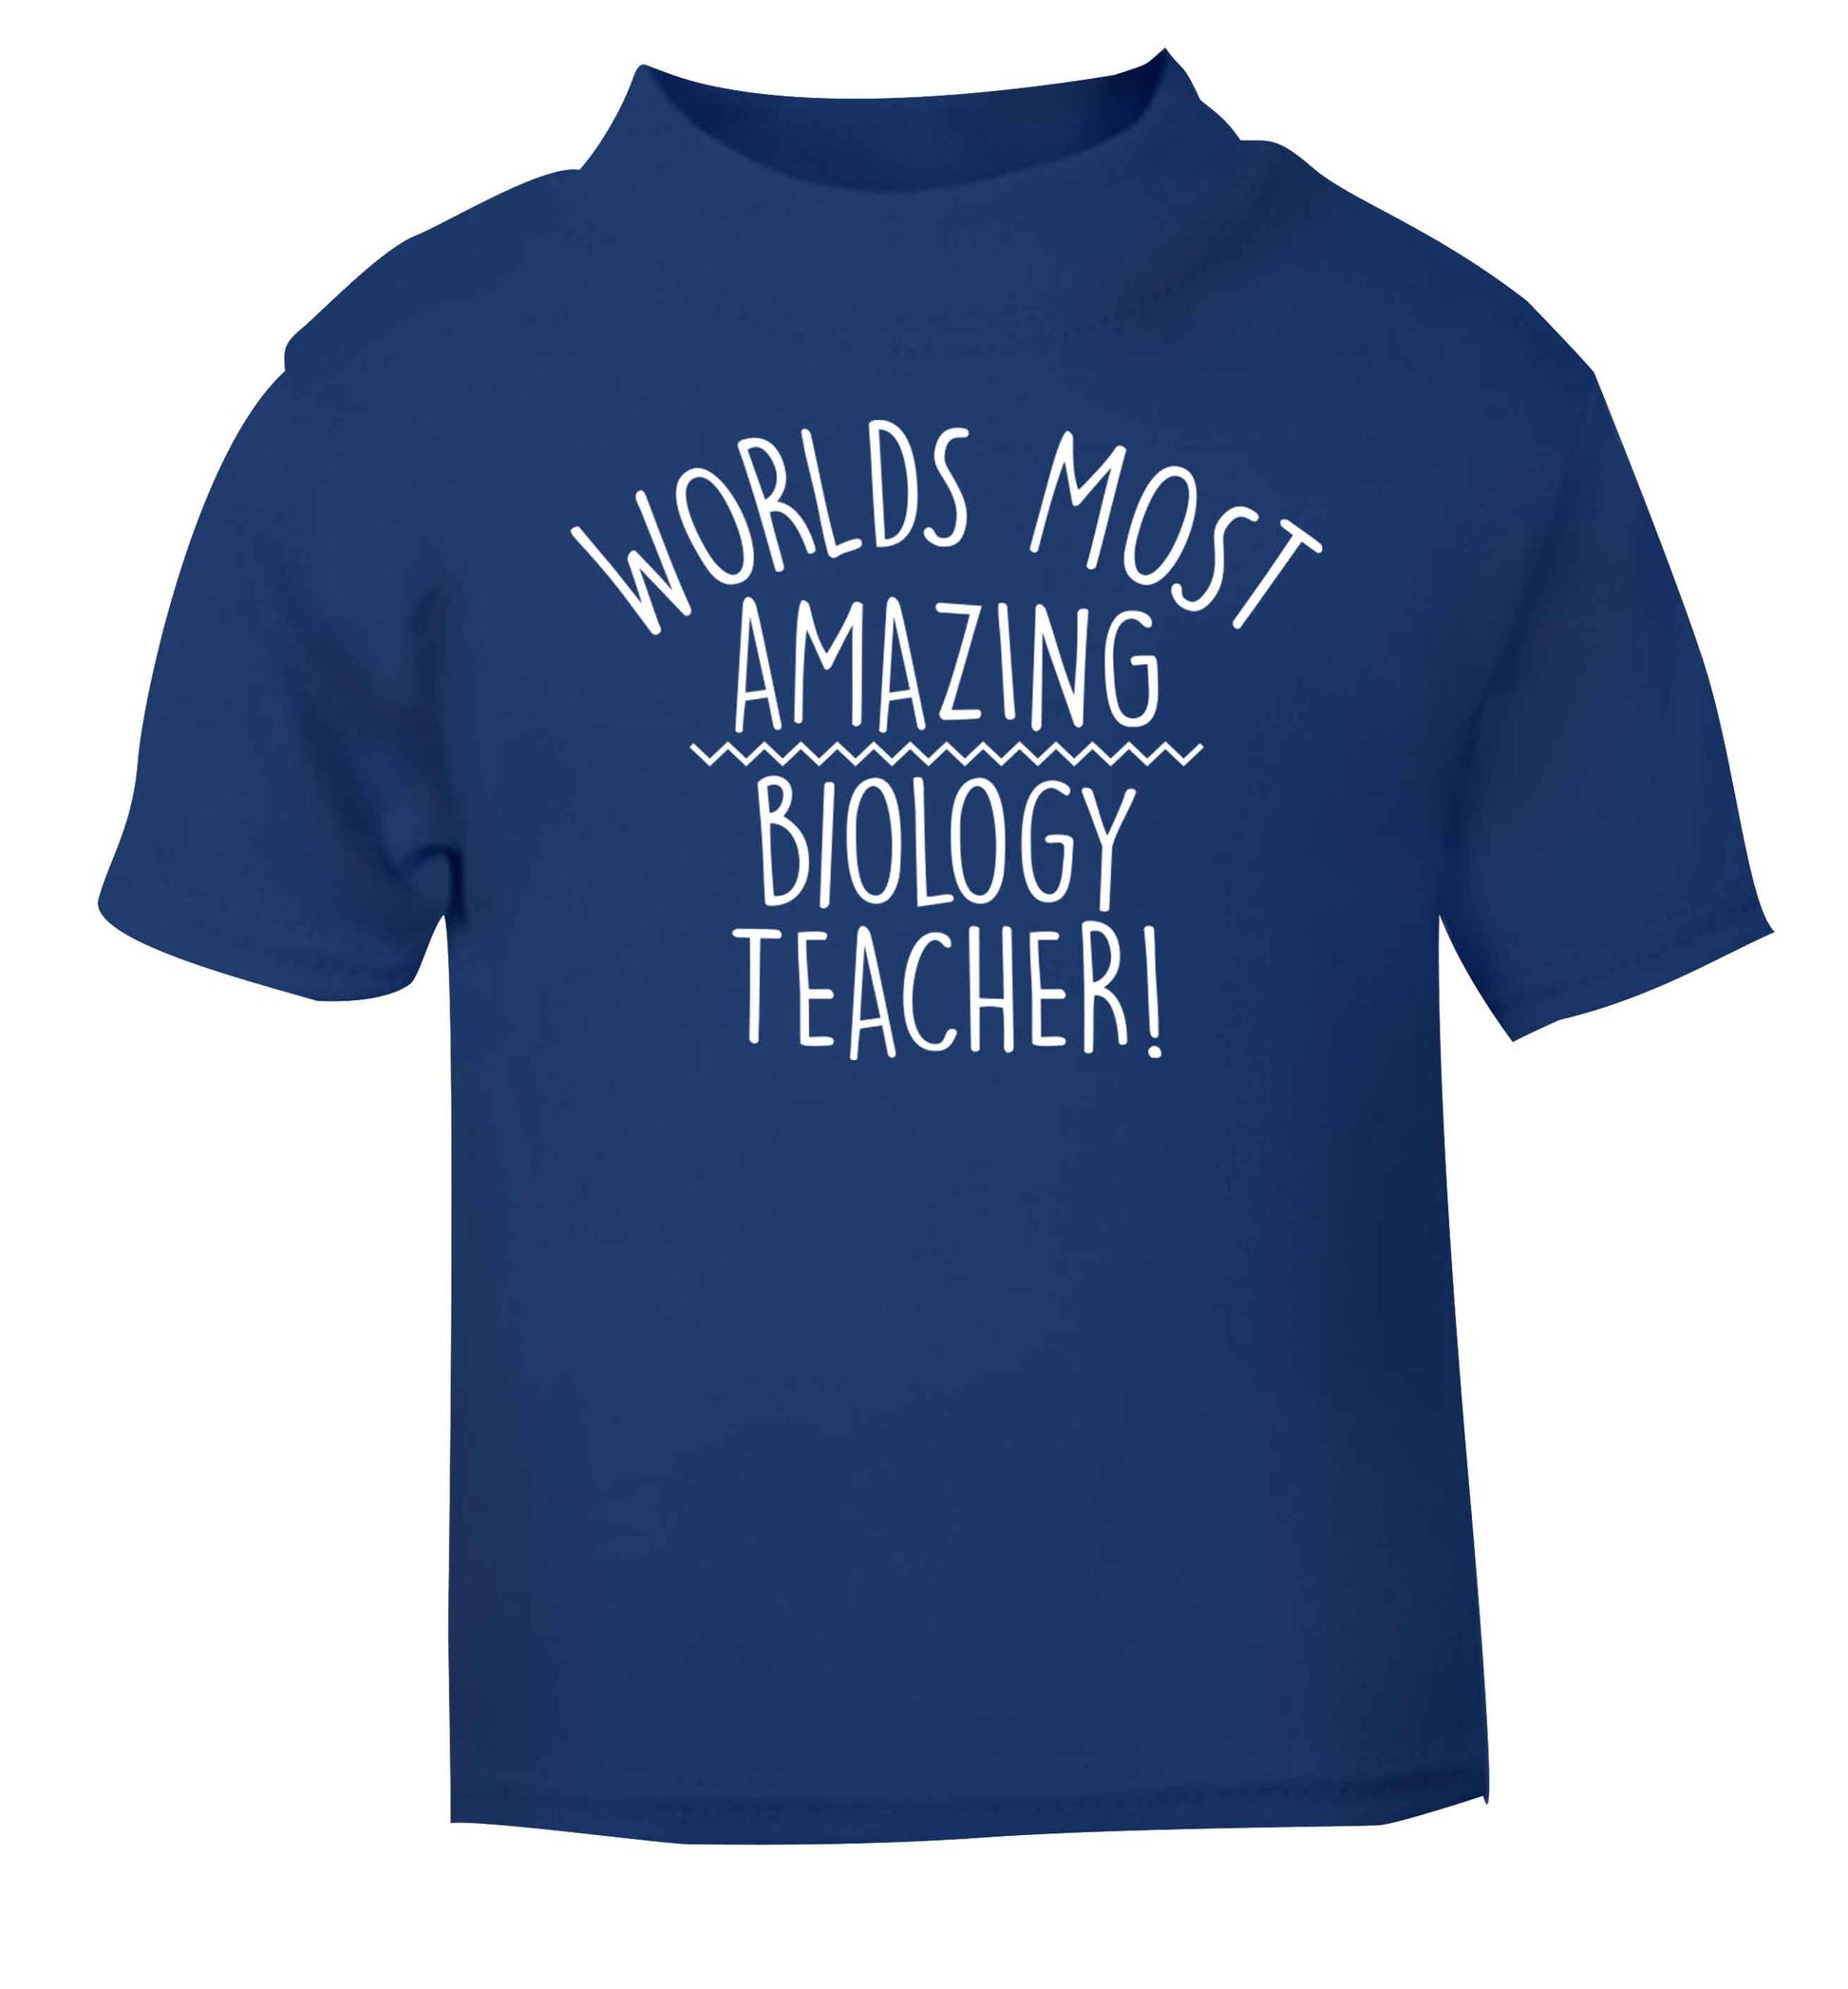 Worlds most amazing biology teacher blue baby toddler Tshirt 2 Years